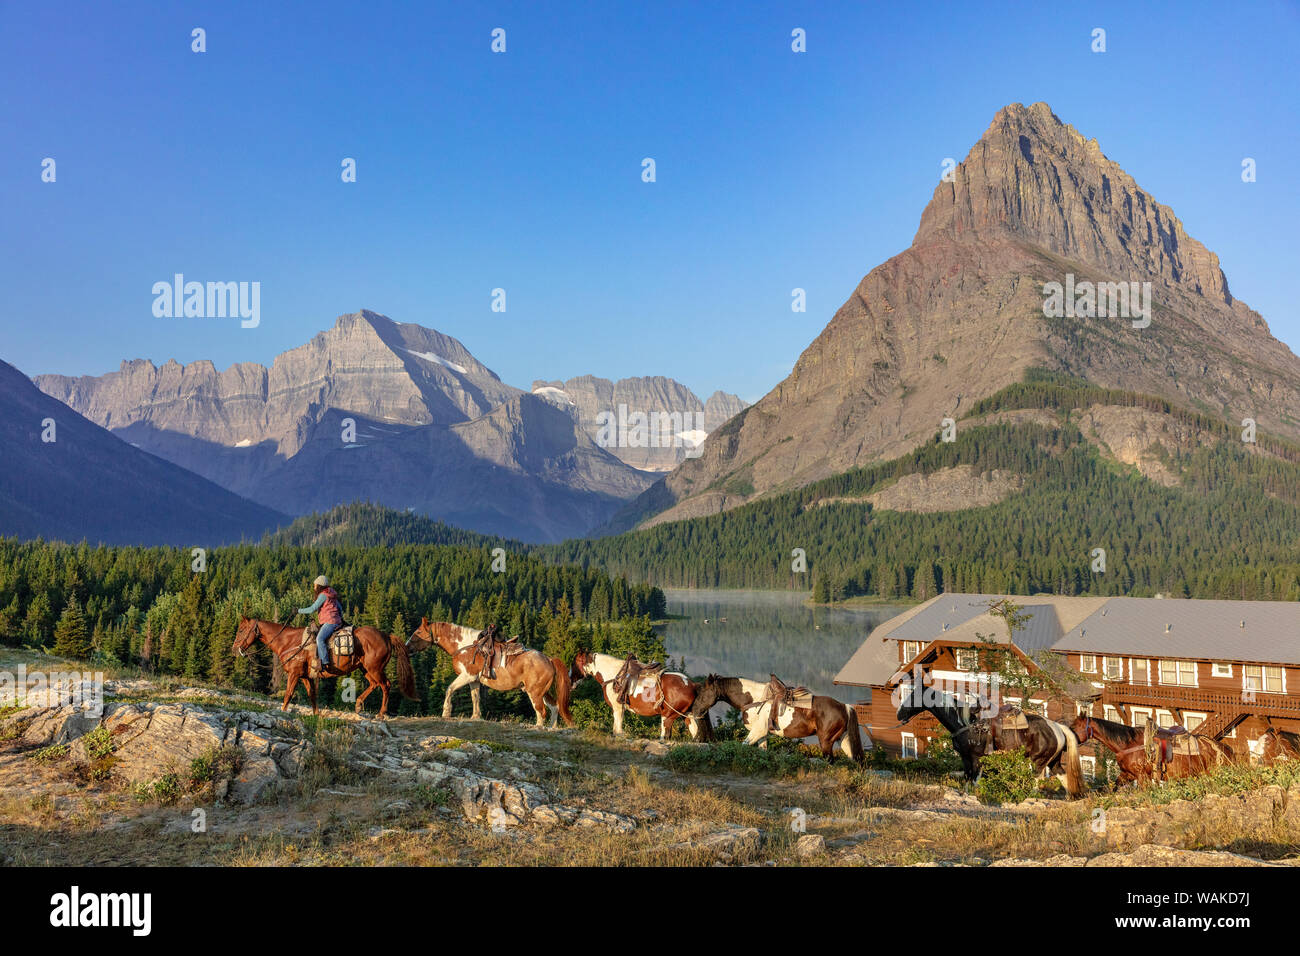 Wrangler leads Horses at Many Glacier Hotel in Glacier National Park, Montana, USA Stock Photo